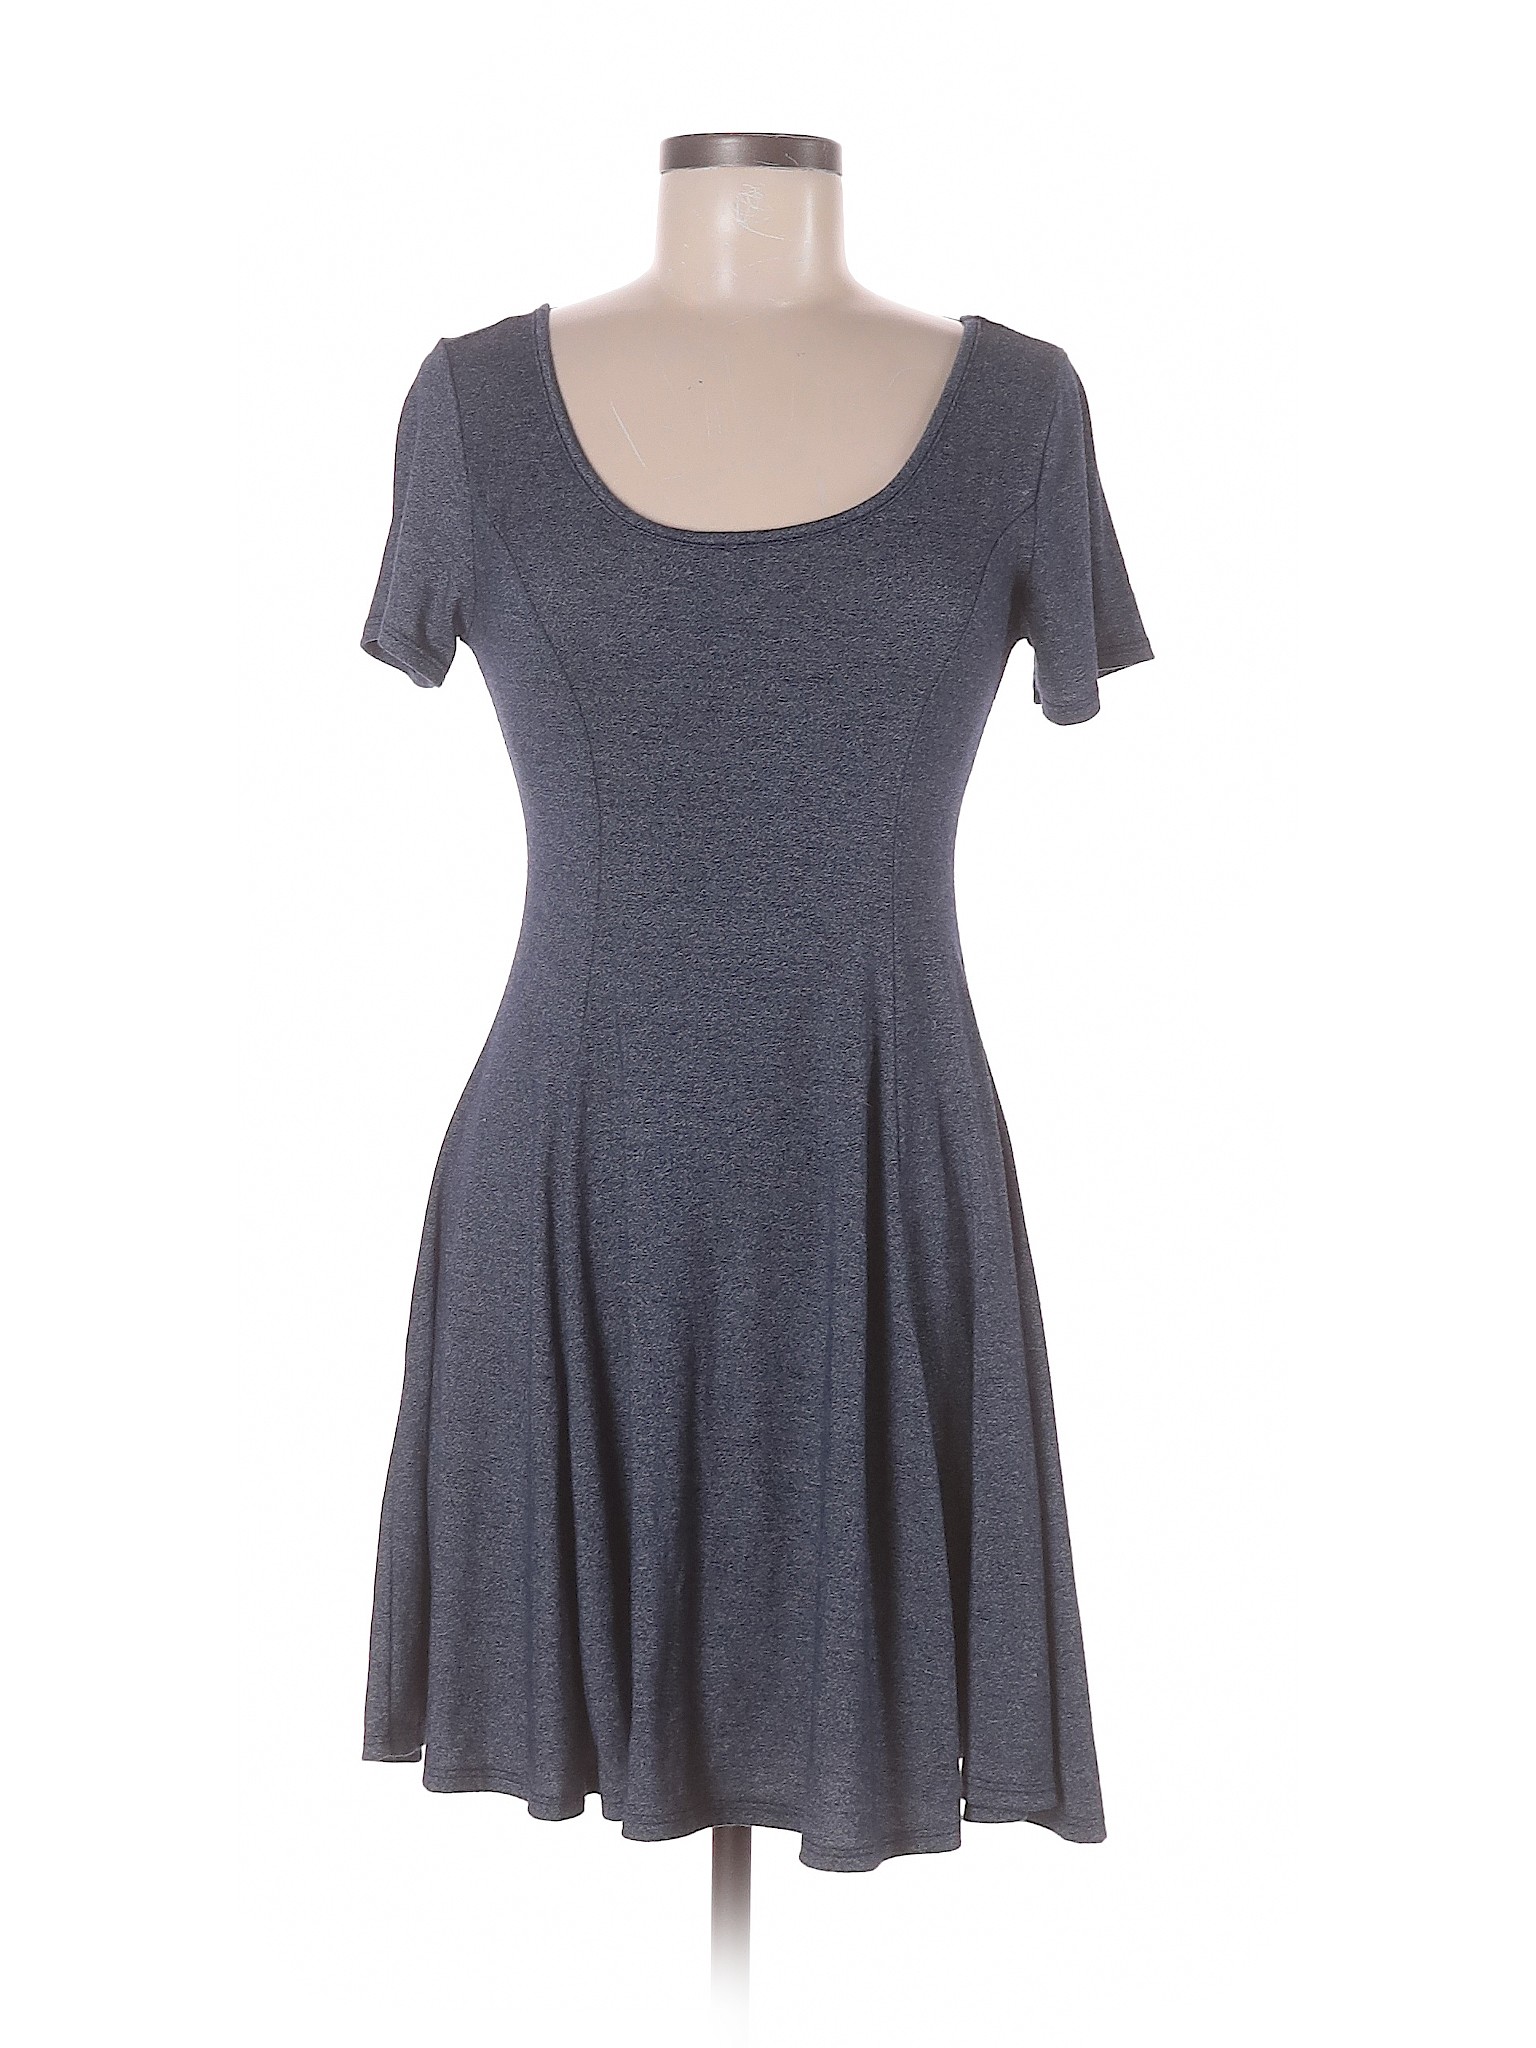 Acemi Women Gray Casual Dress M | eBay